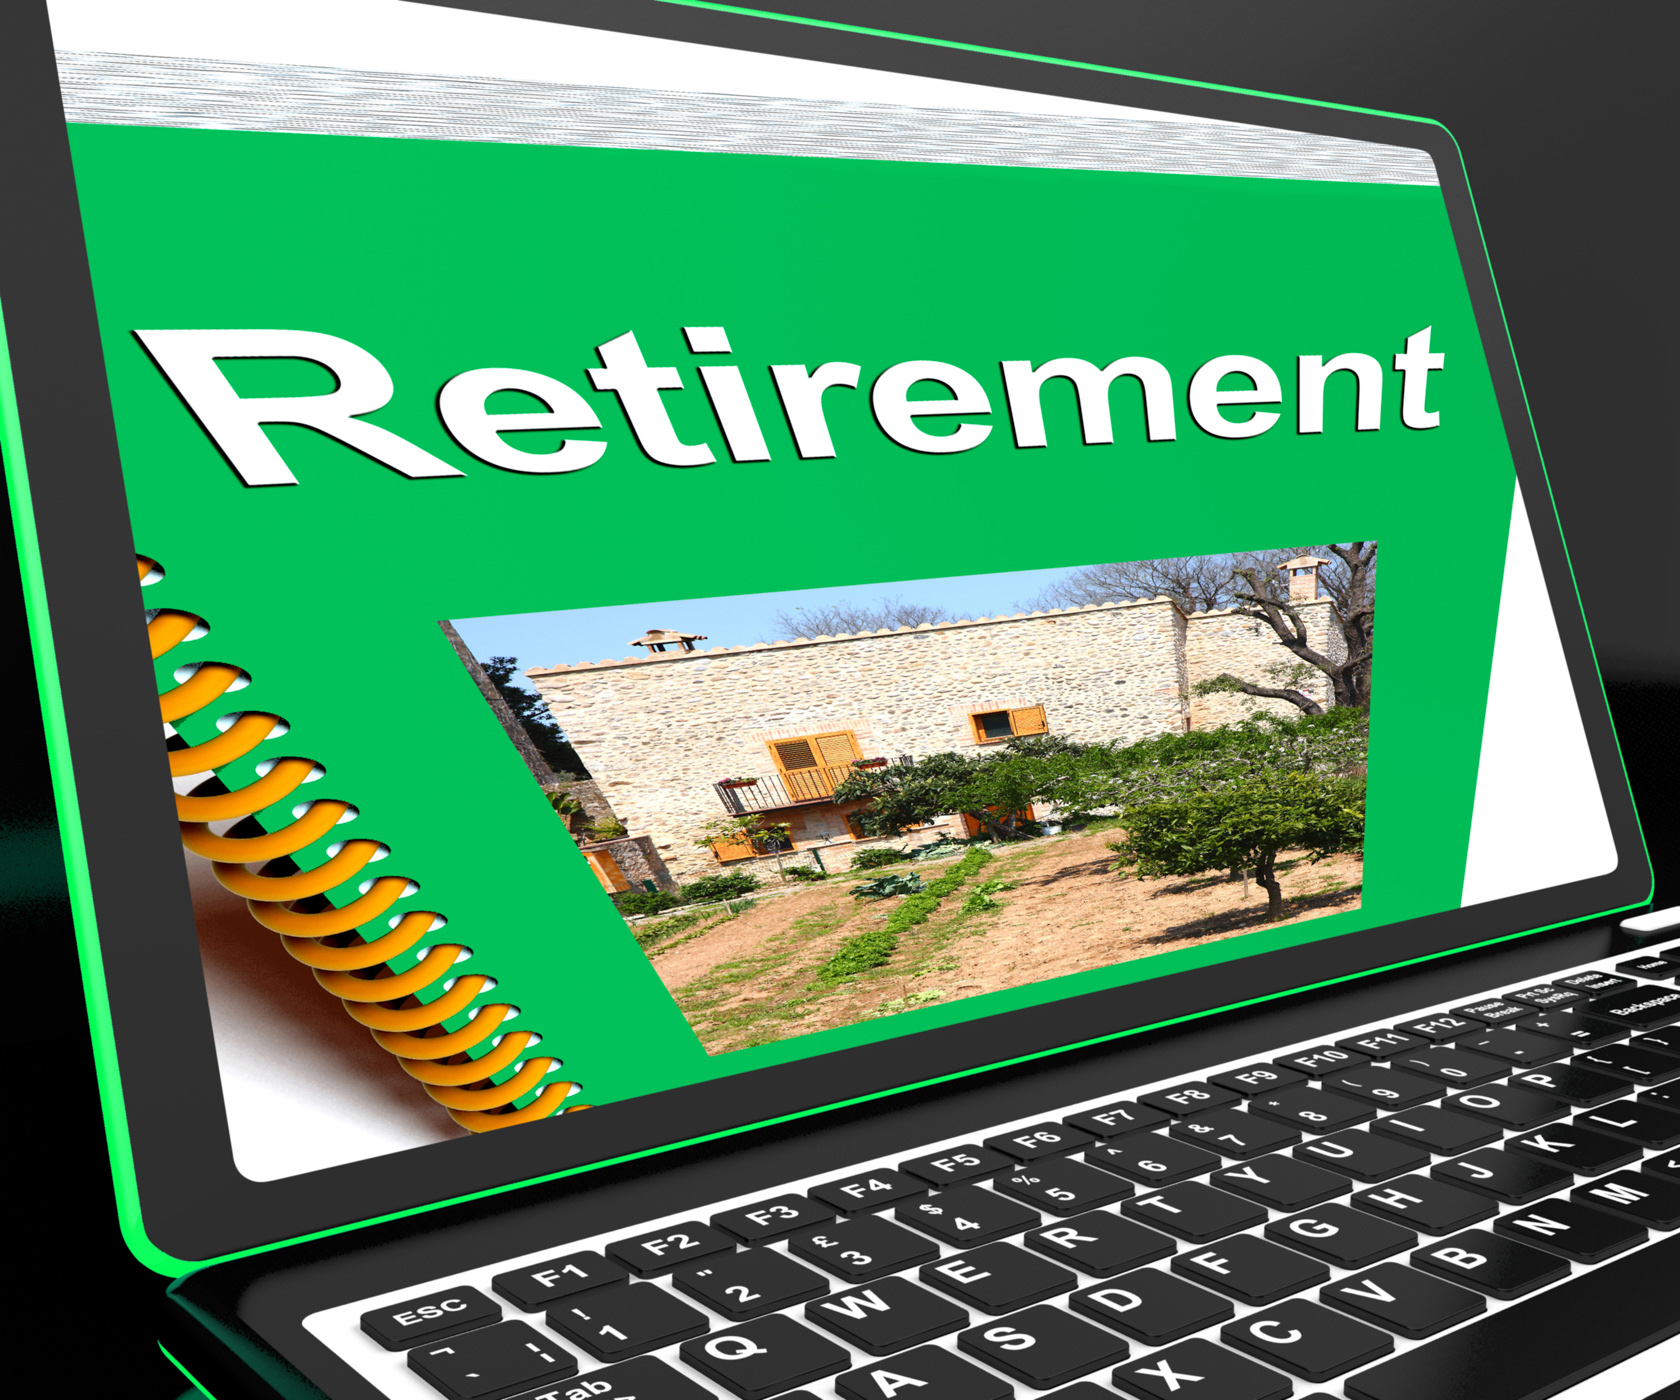 Retirement Book On Laptop Showing Pension Plans, Book, Elderly, Internet, Laptop, HQ Photo